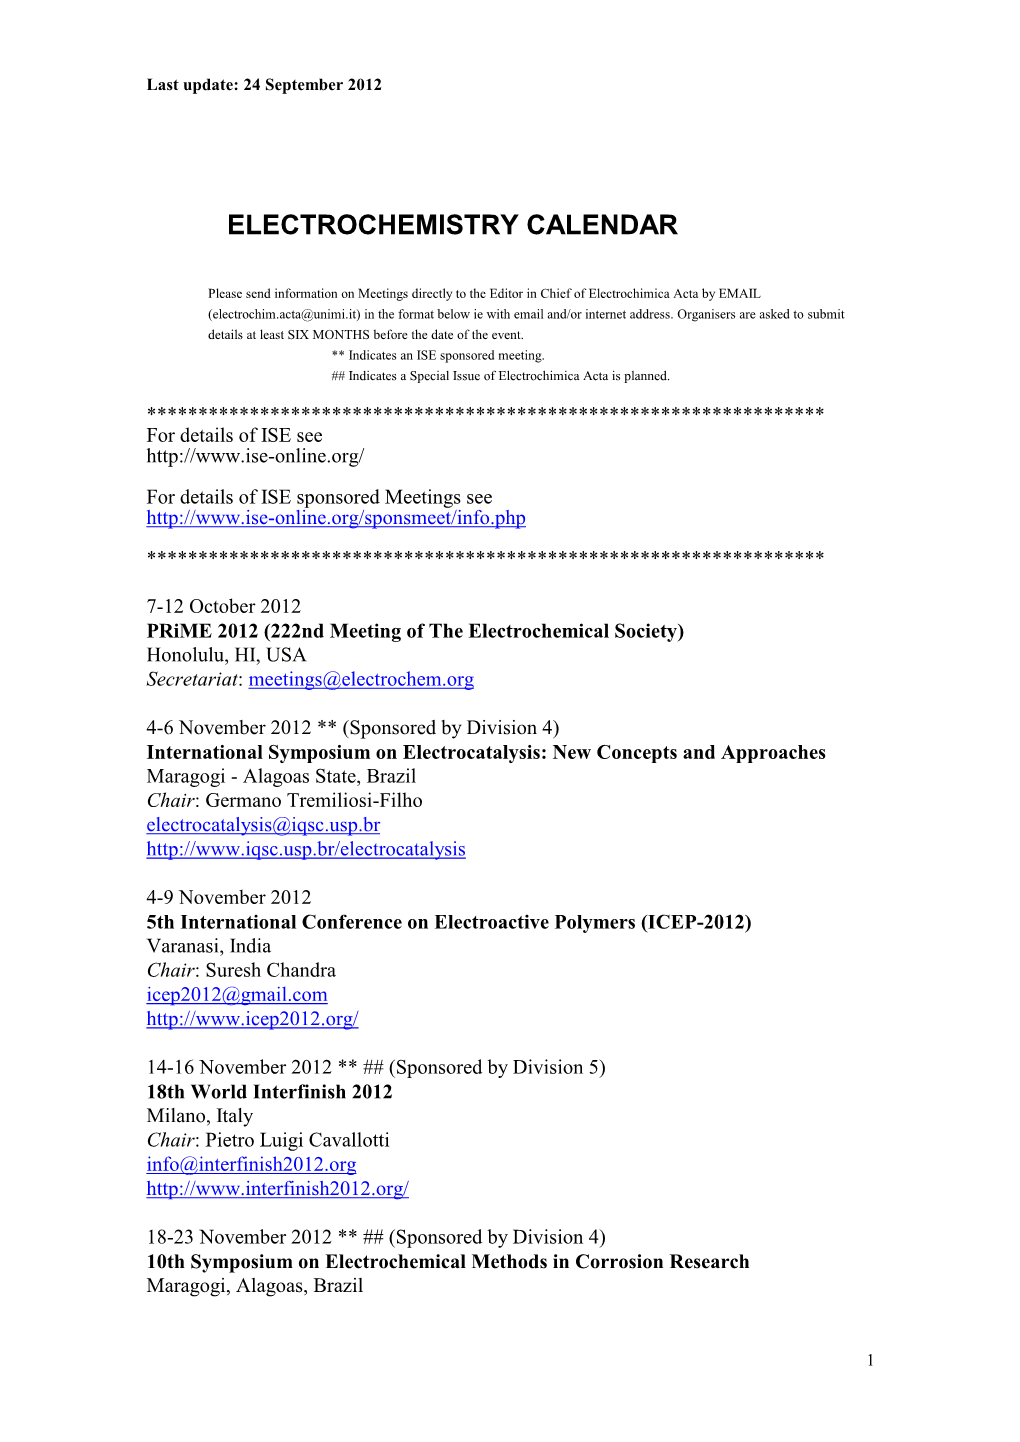 Electrochemistry Calendar